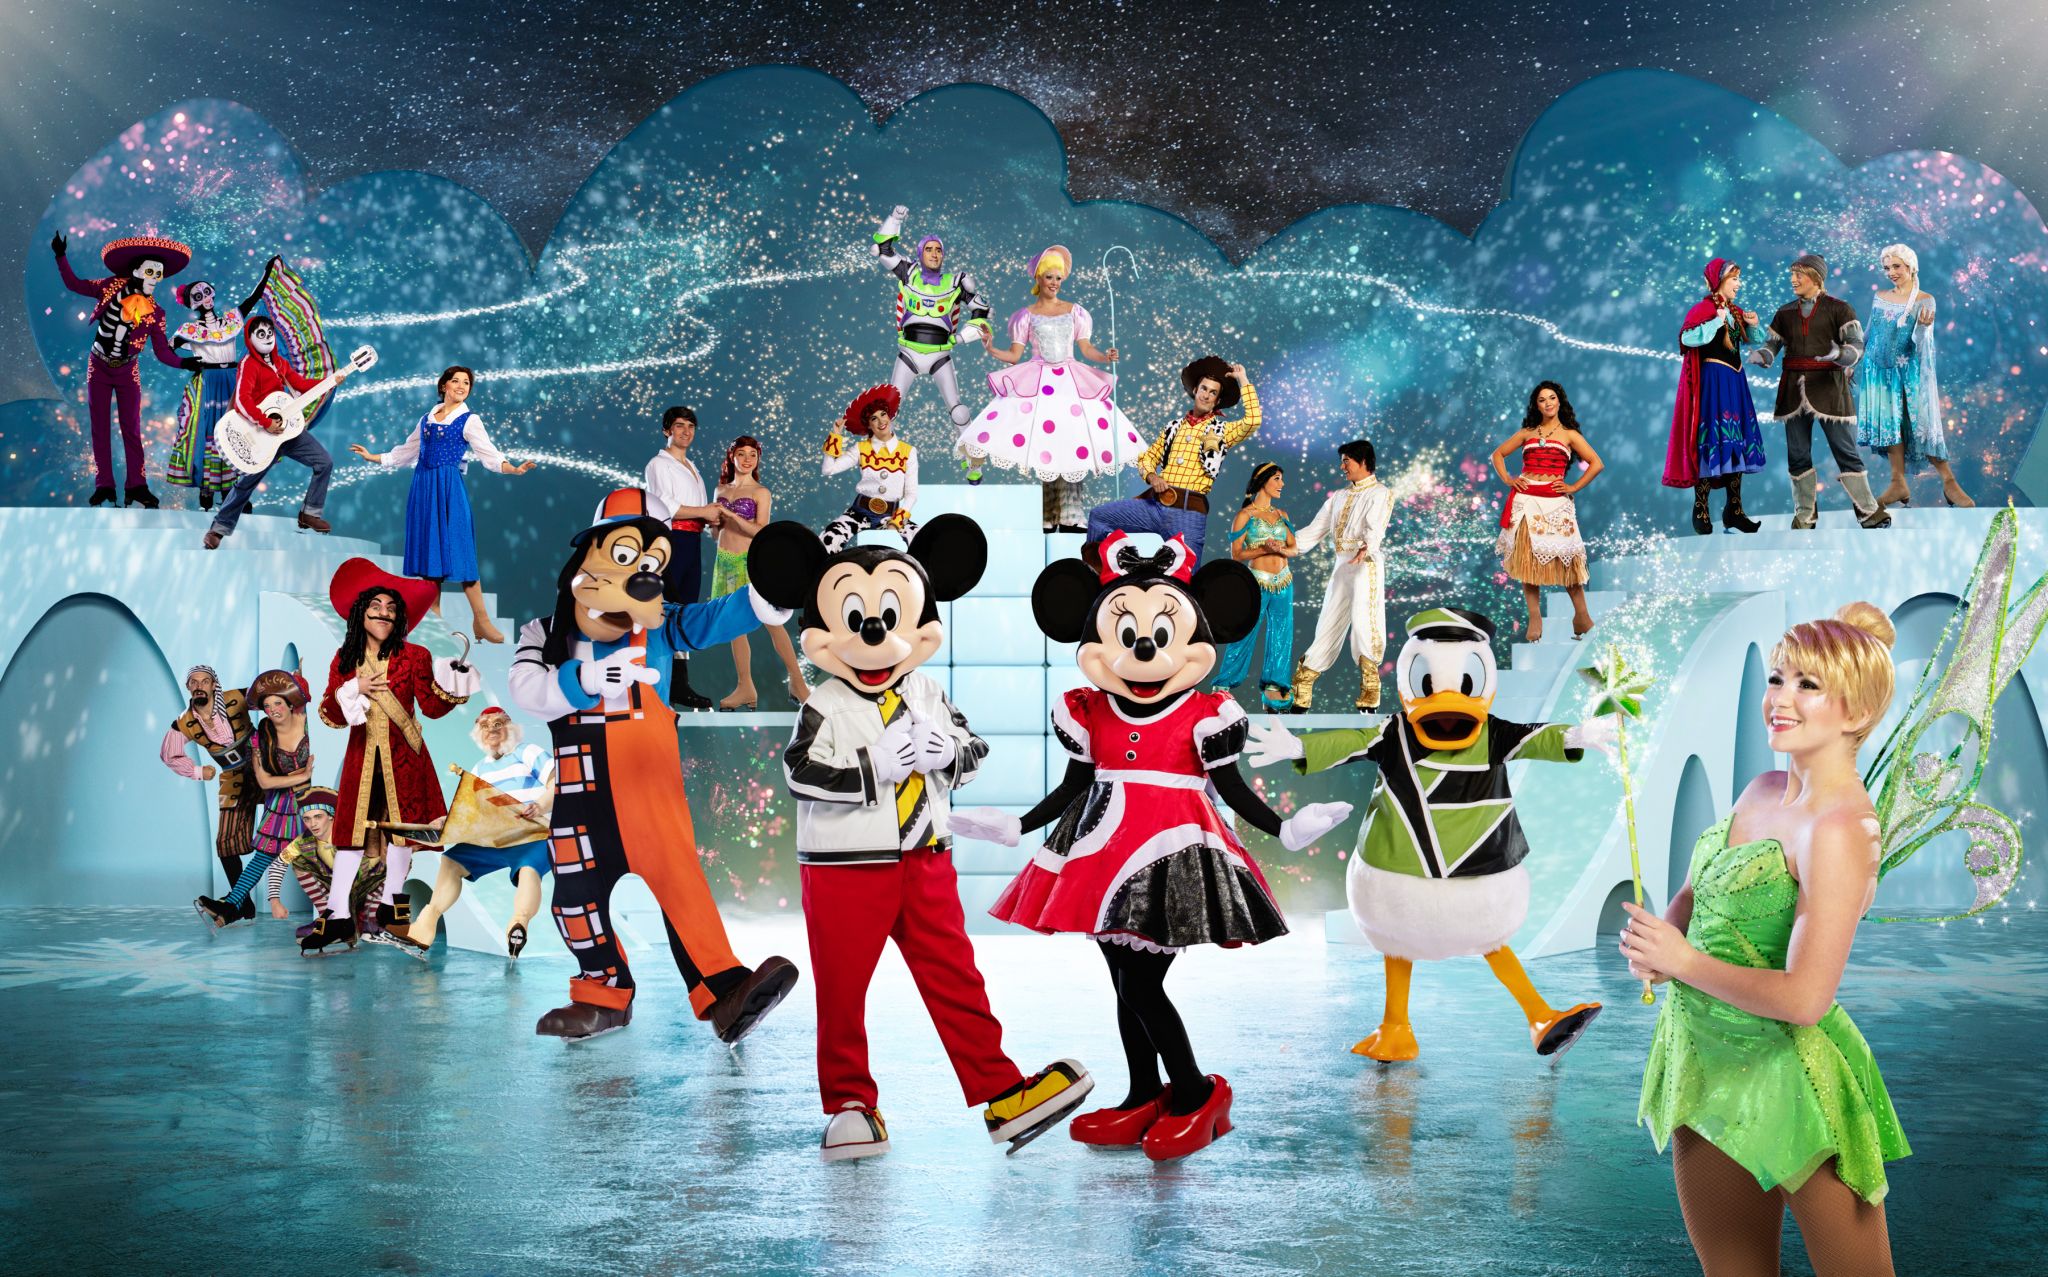 Disney On Ice returns to San Antonio this April to the Alamodome